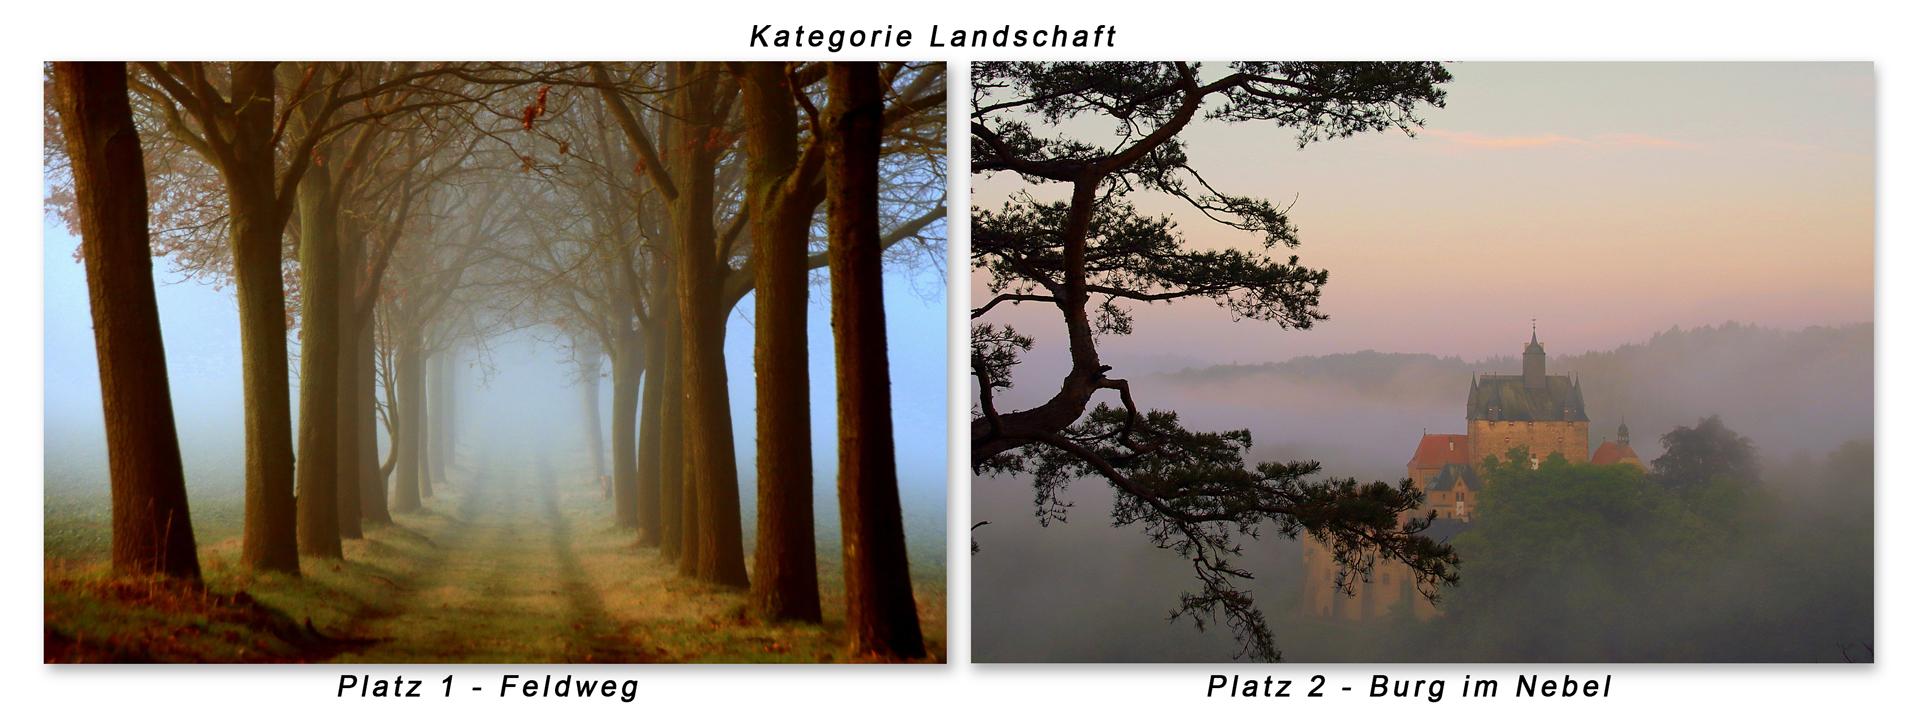 ps-Kat-Landschaft